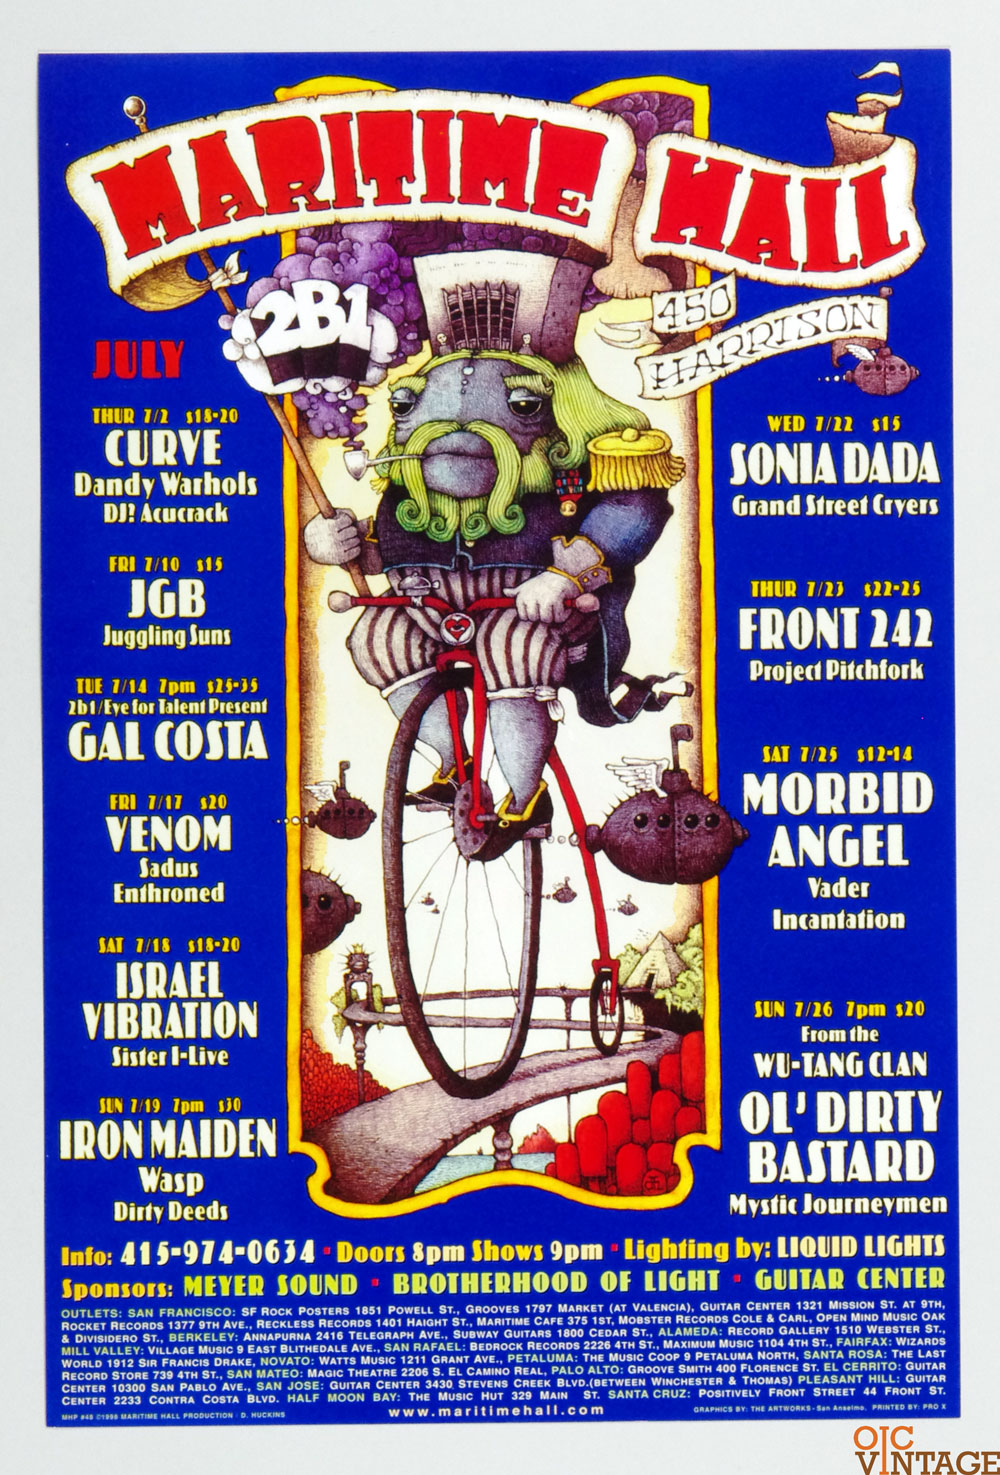 Maritime Hall 1998 Jul Poster Iron Maiden Sonia Dada Front 242